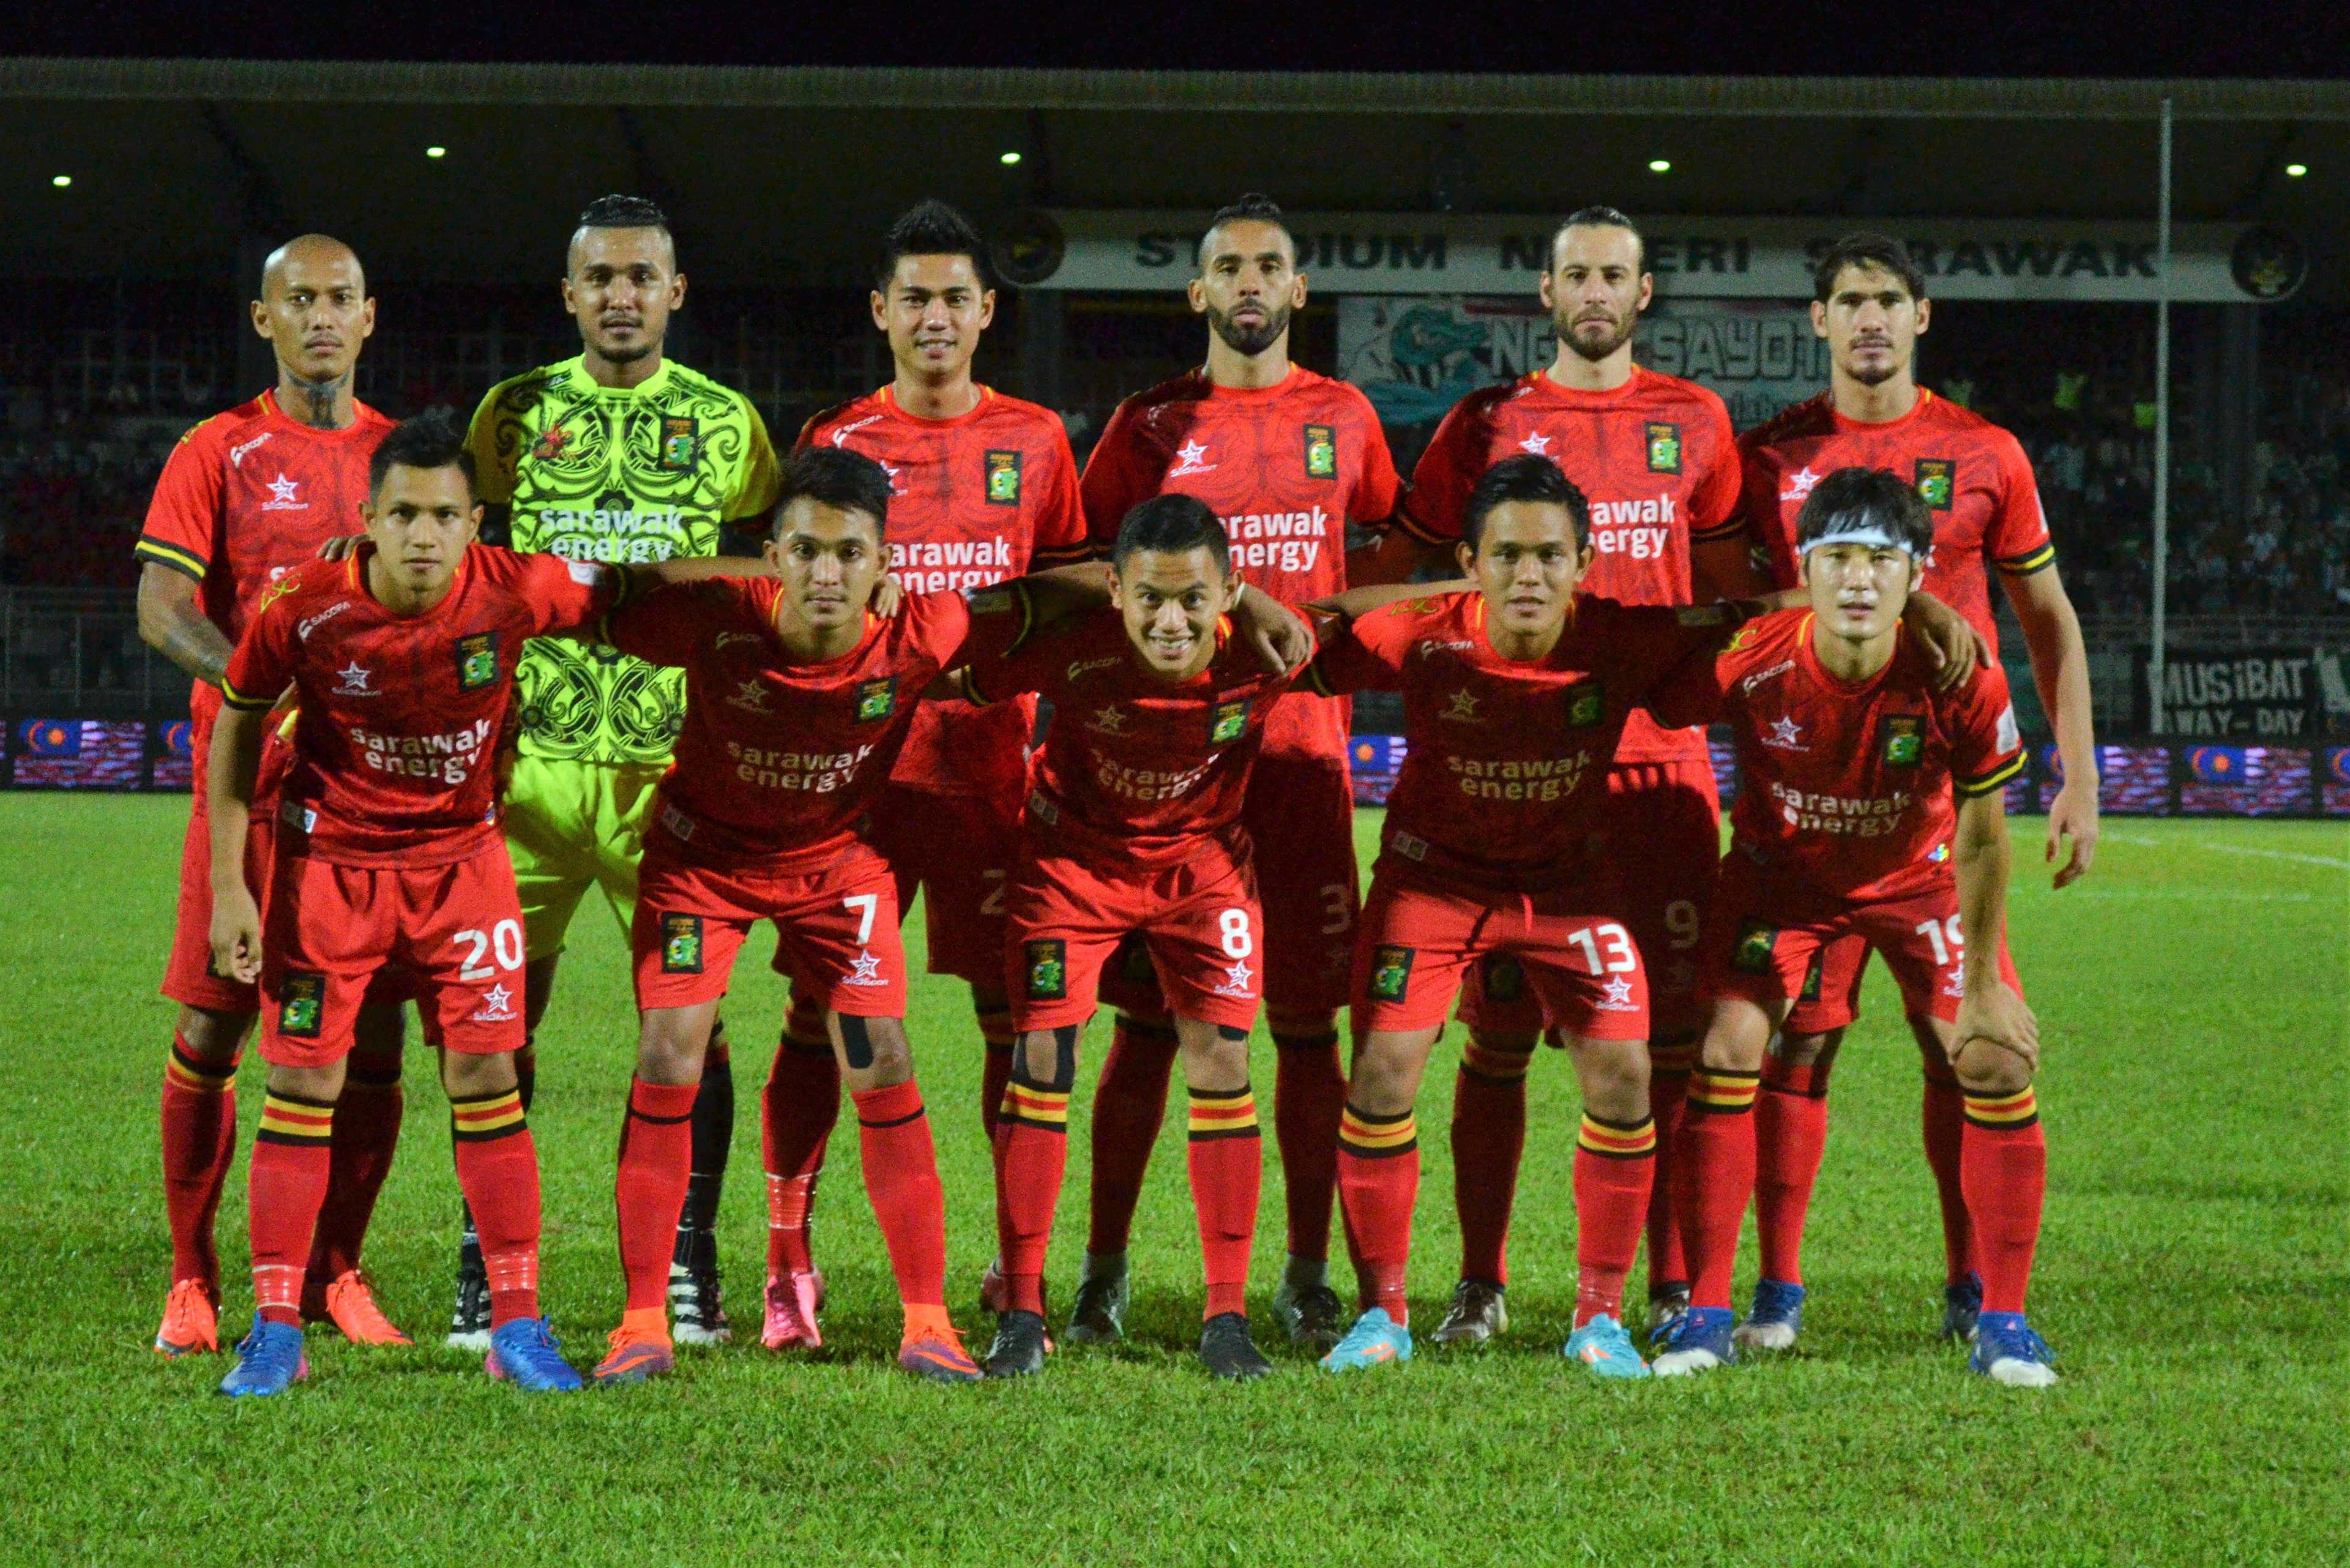 Sarawak's first XI against Melaka United 18/2/2017